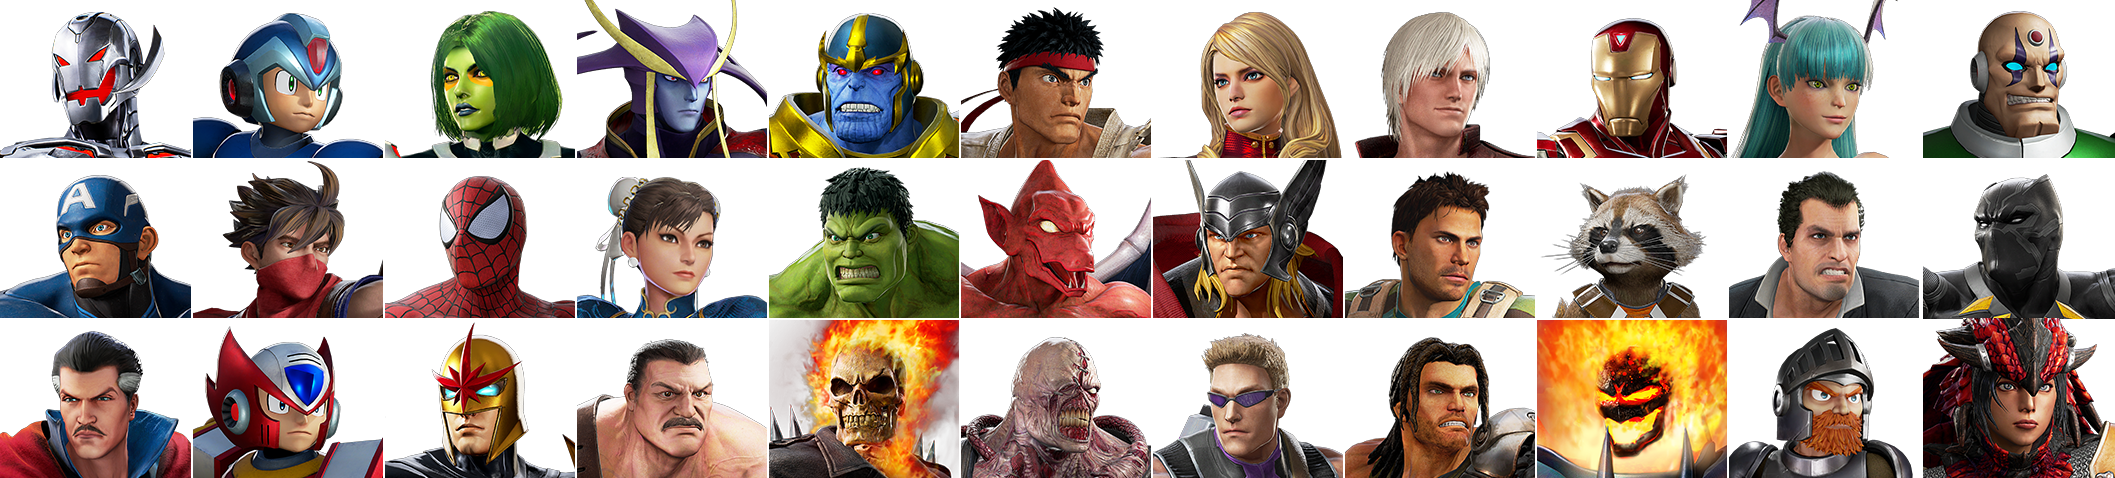 Marvel vs. Capcom: Infinite - Character Select Icons